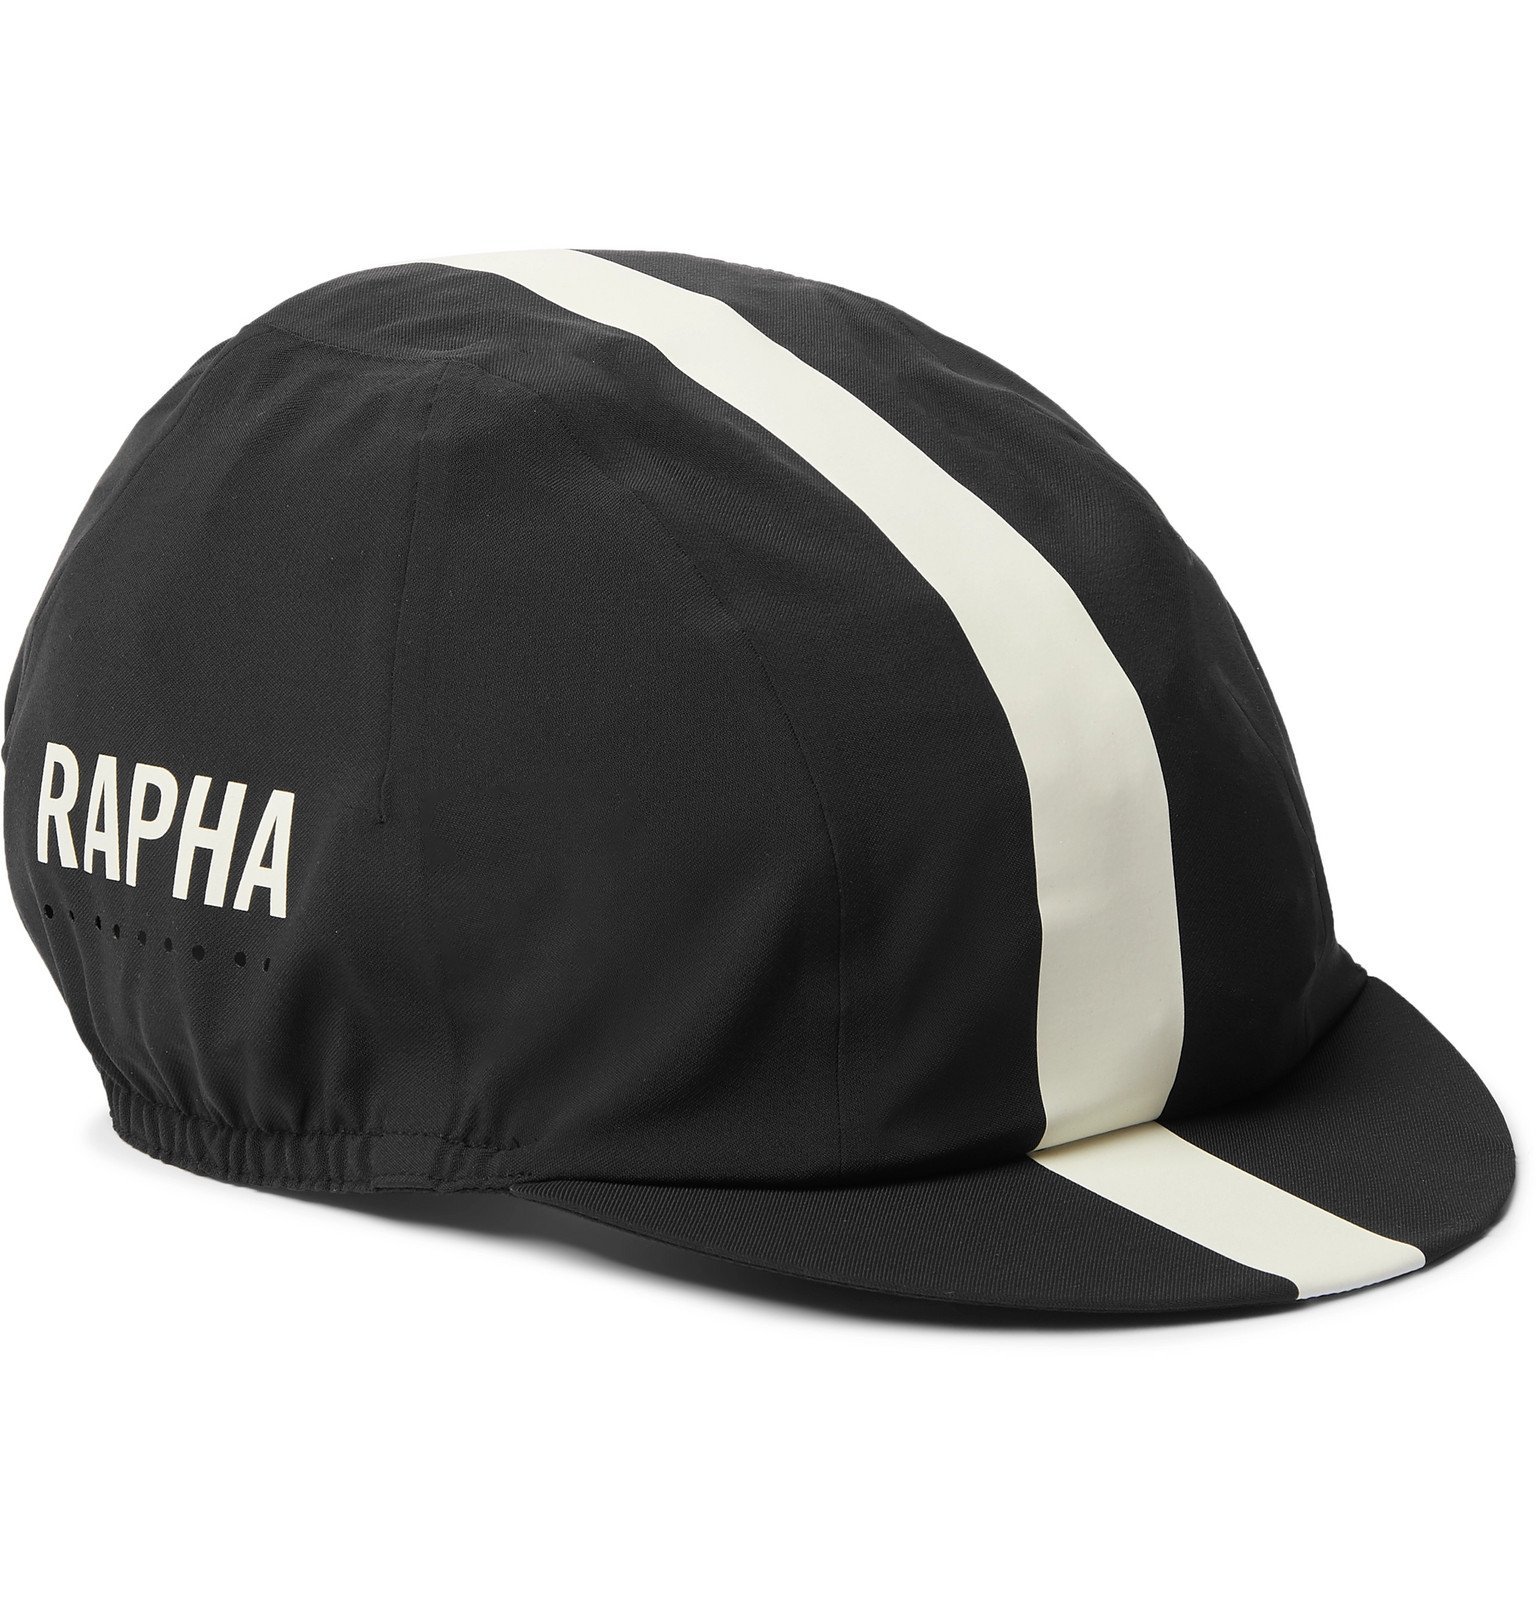 rapha cycling cap